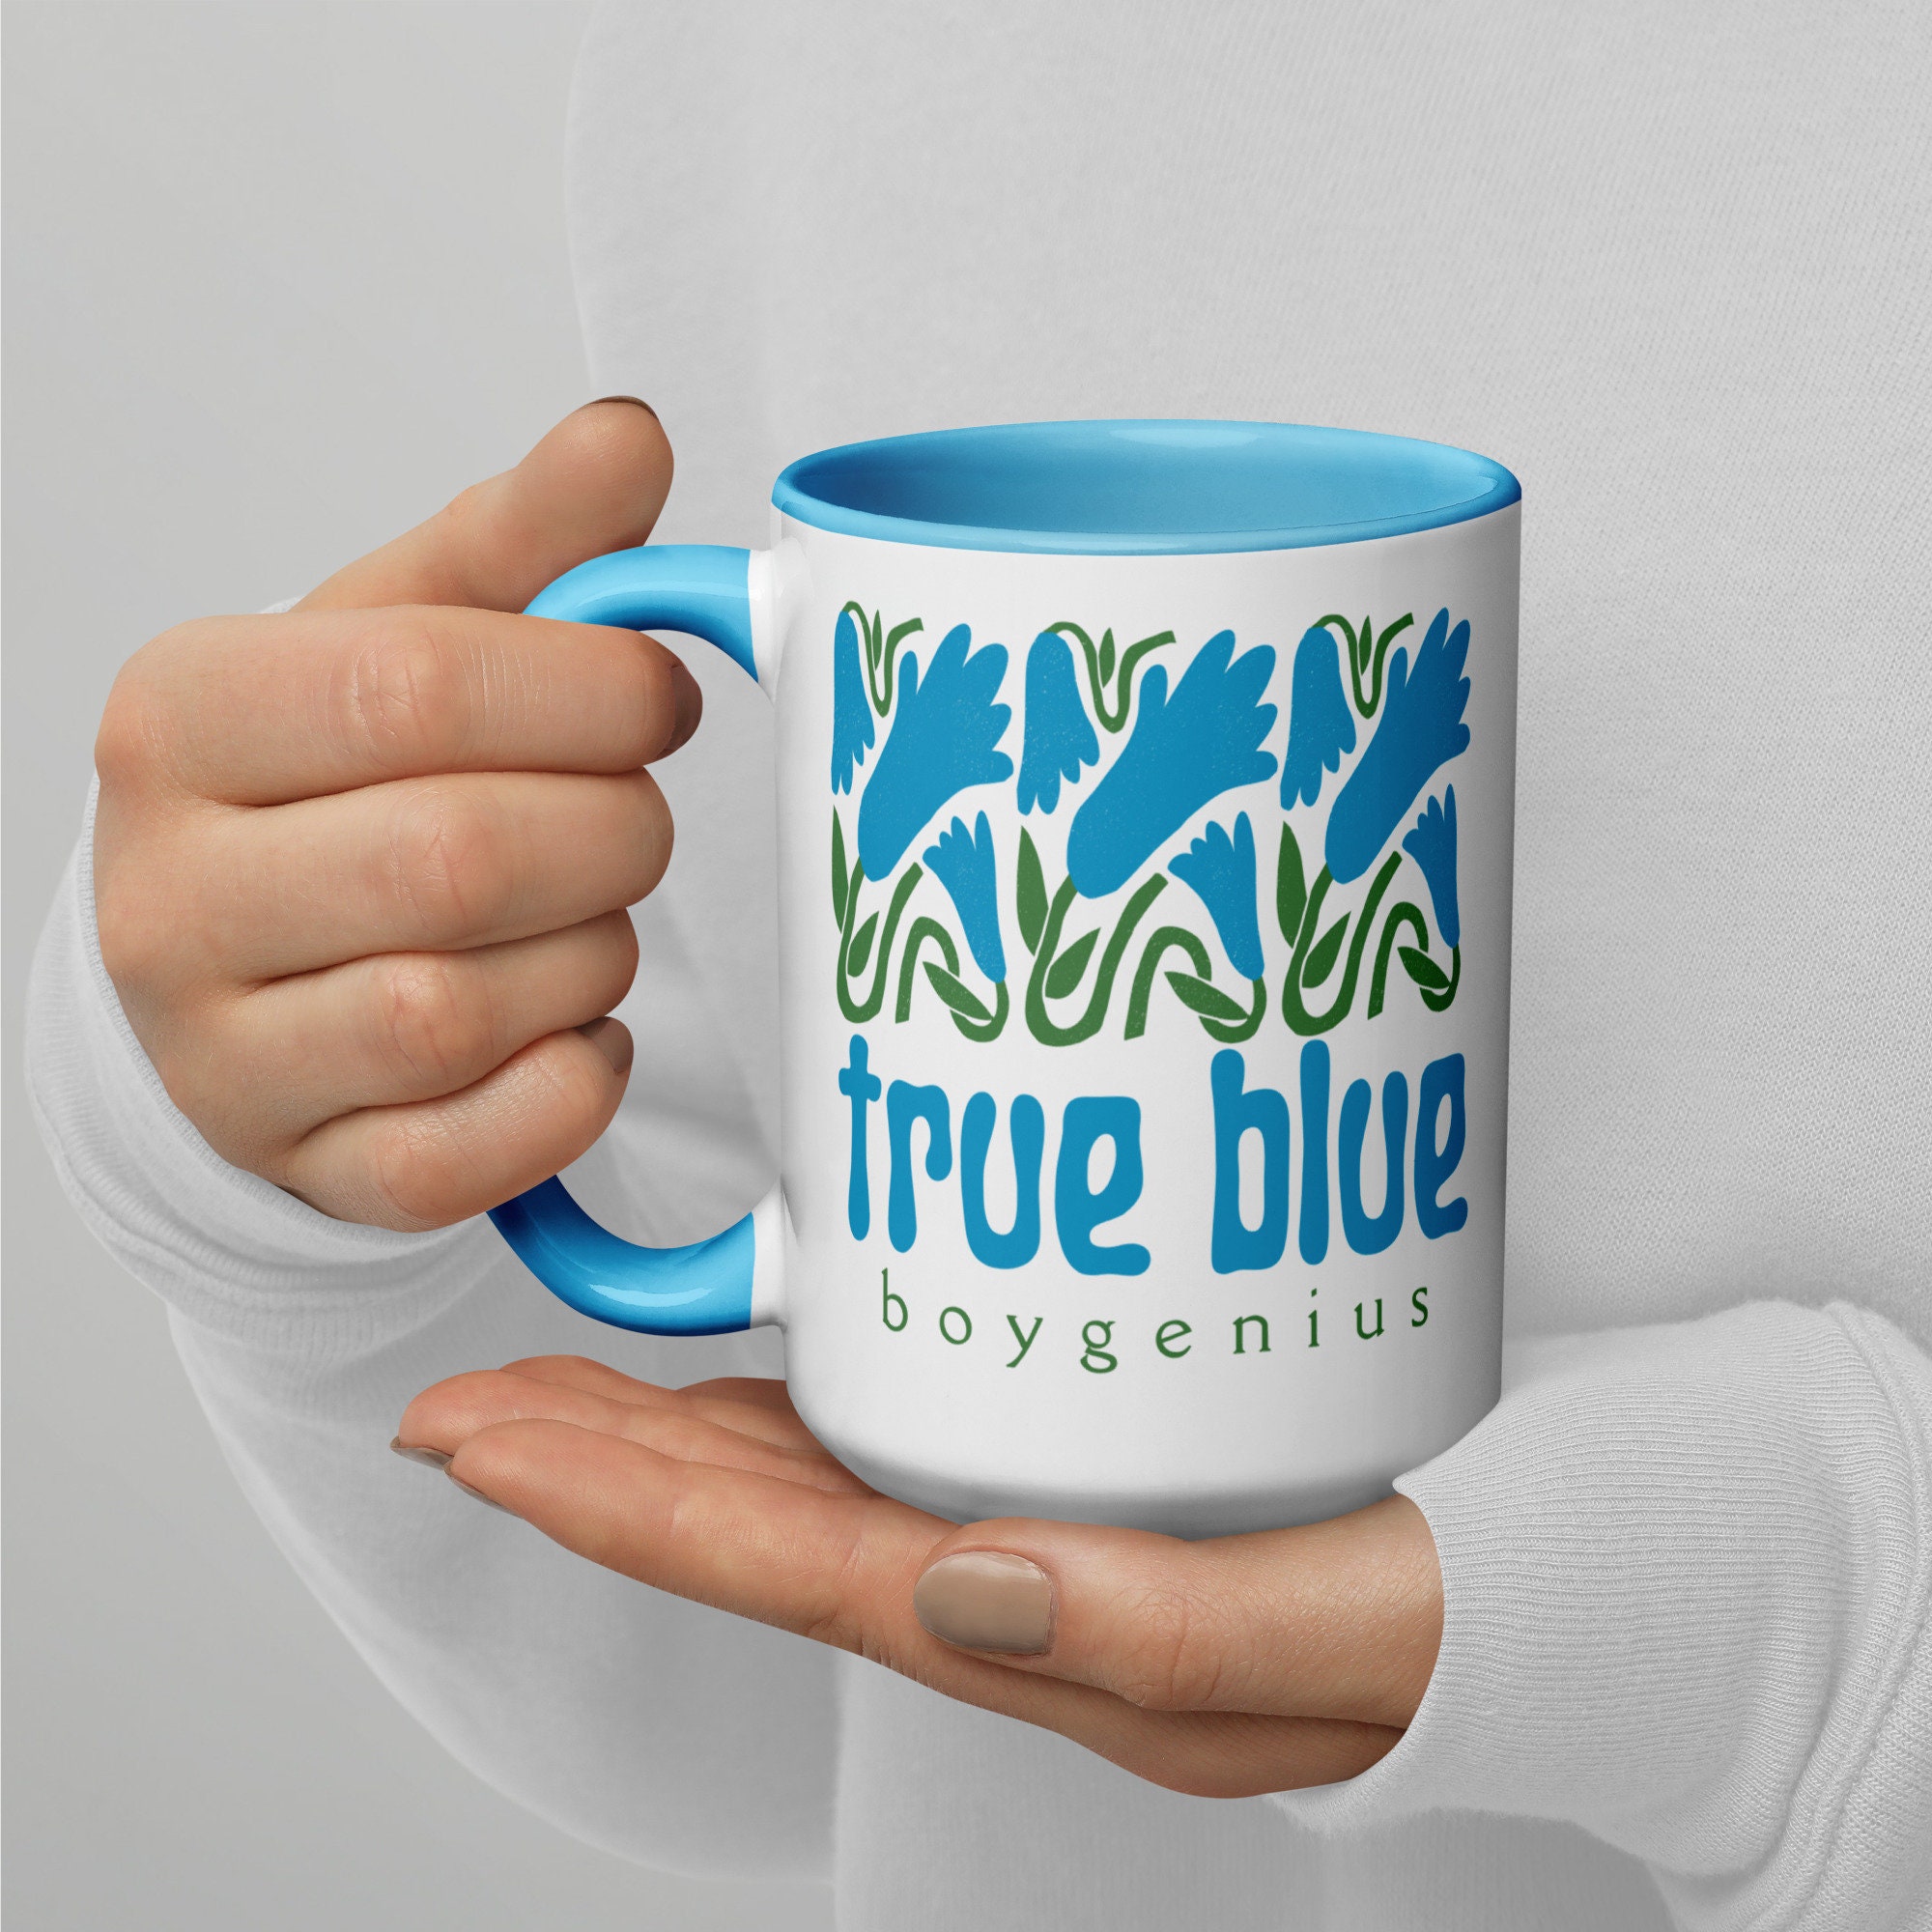 True Blue Coffee Gift Set